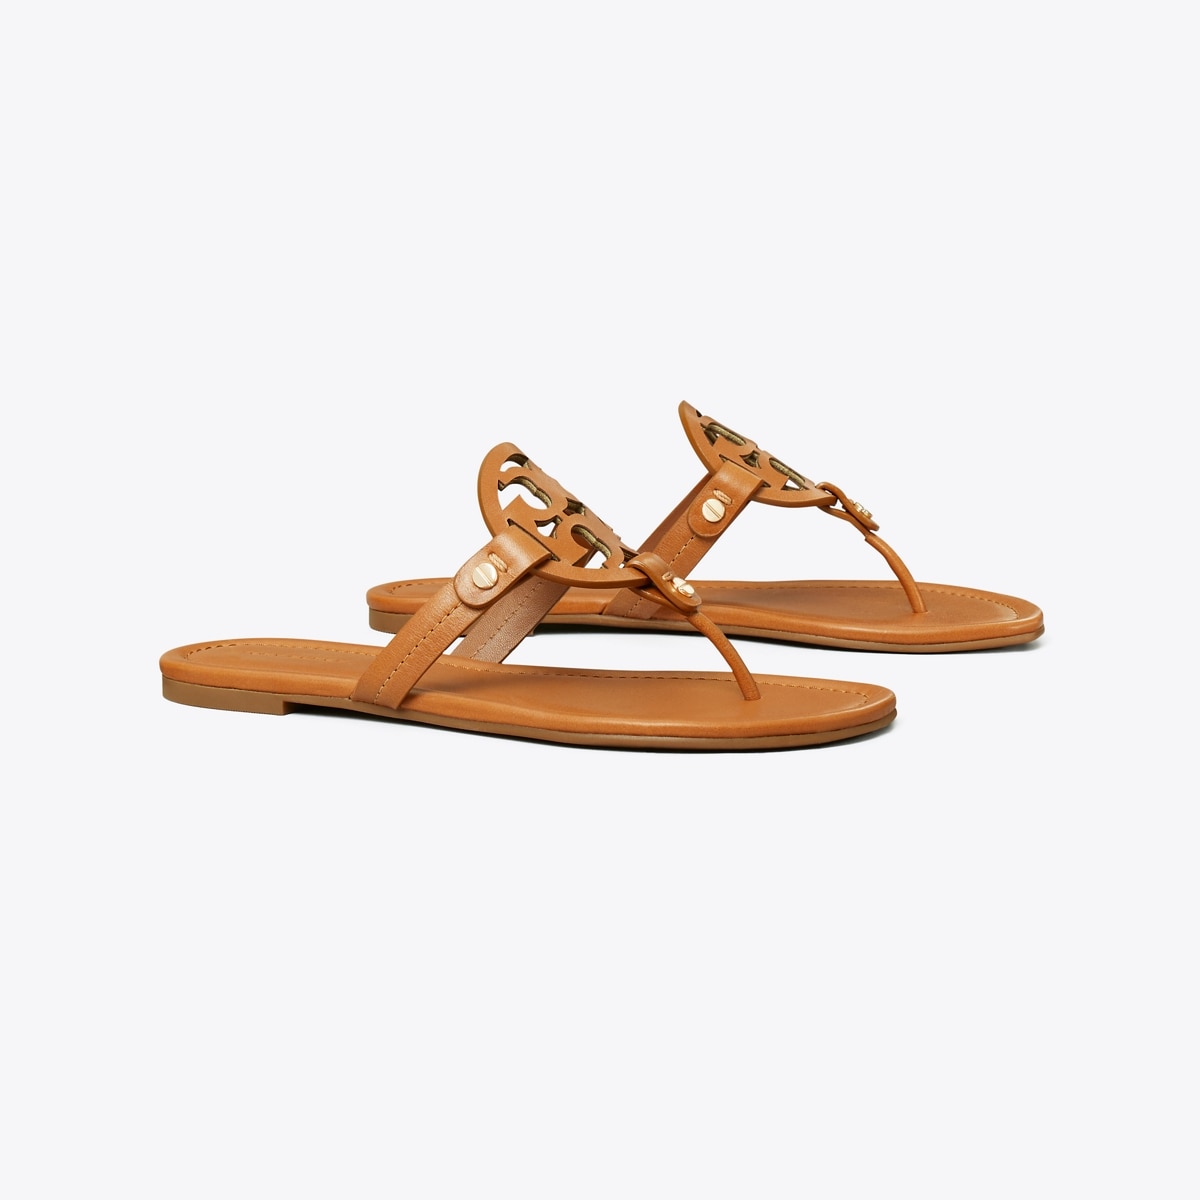 tory burch miller sandals sale size 8